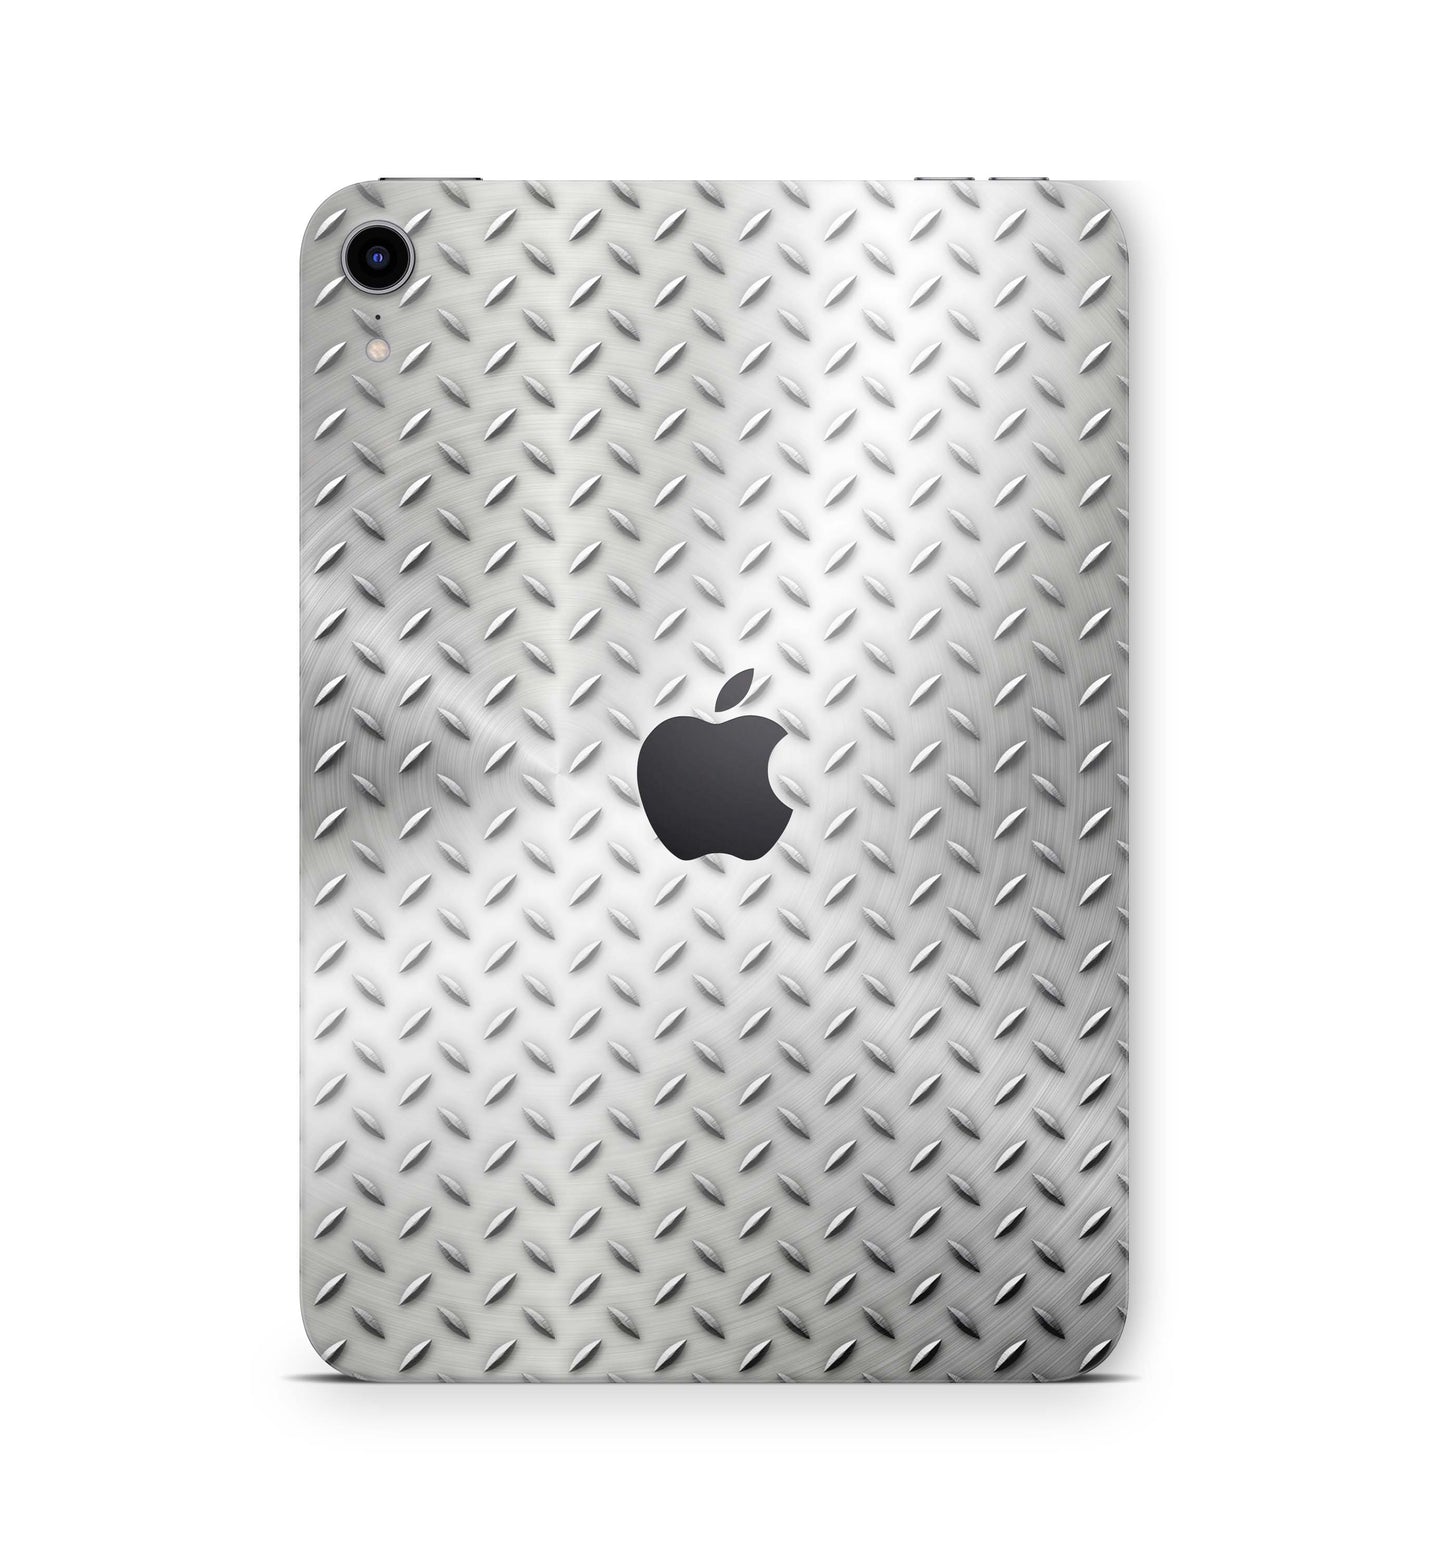 iPad Mini Skin Design Cover Folie Vinyl Skins & Wraps für alle iPad Mini Modelle Aufkleber Skins4u Stahl  